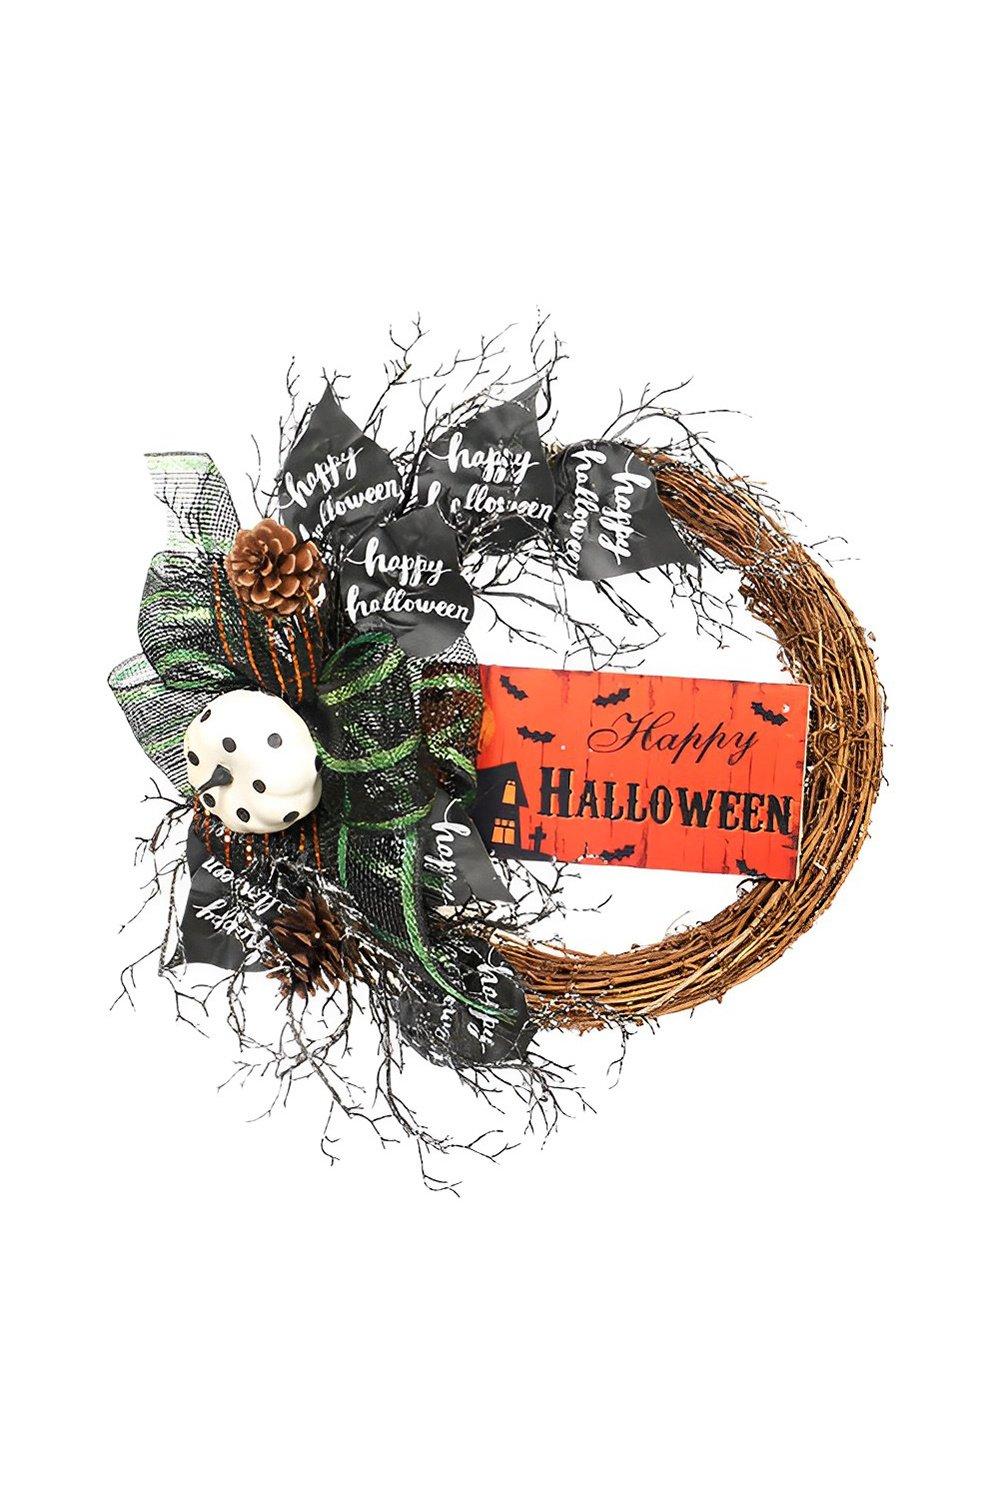 D40cm Halloween Wreath with Bows